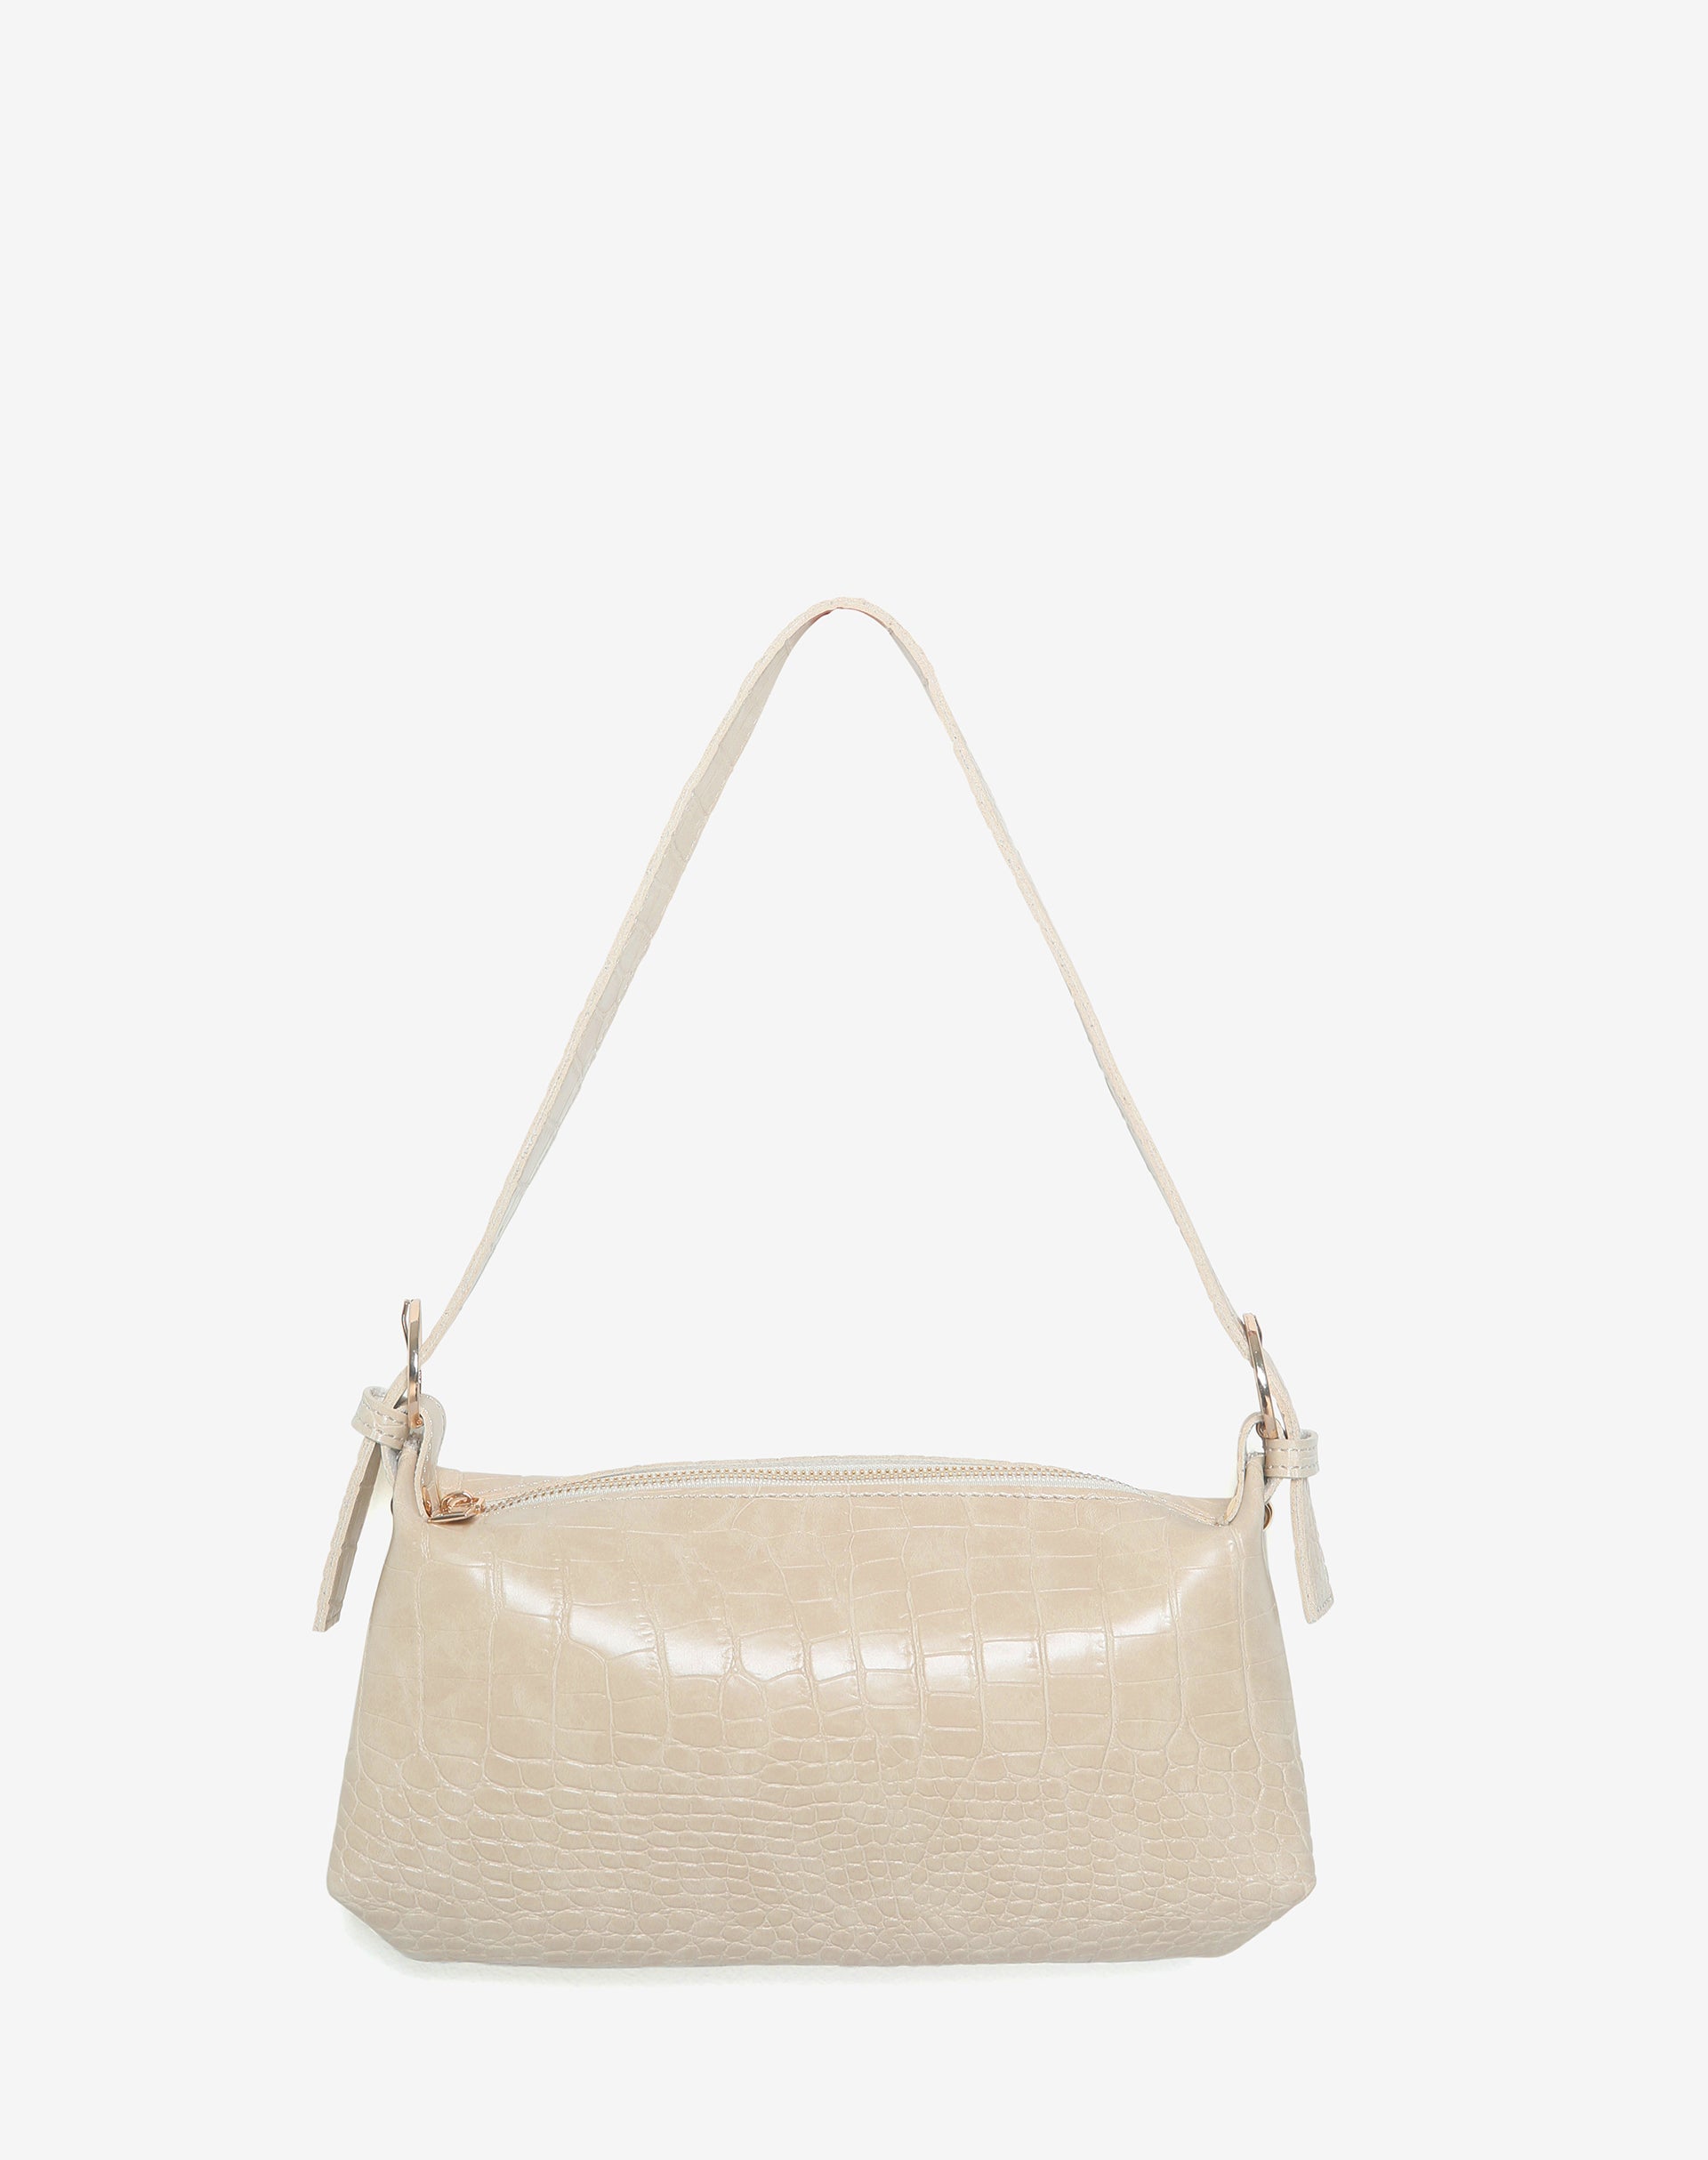 Image of Leila Shoulder Bag in Cream